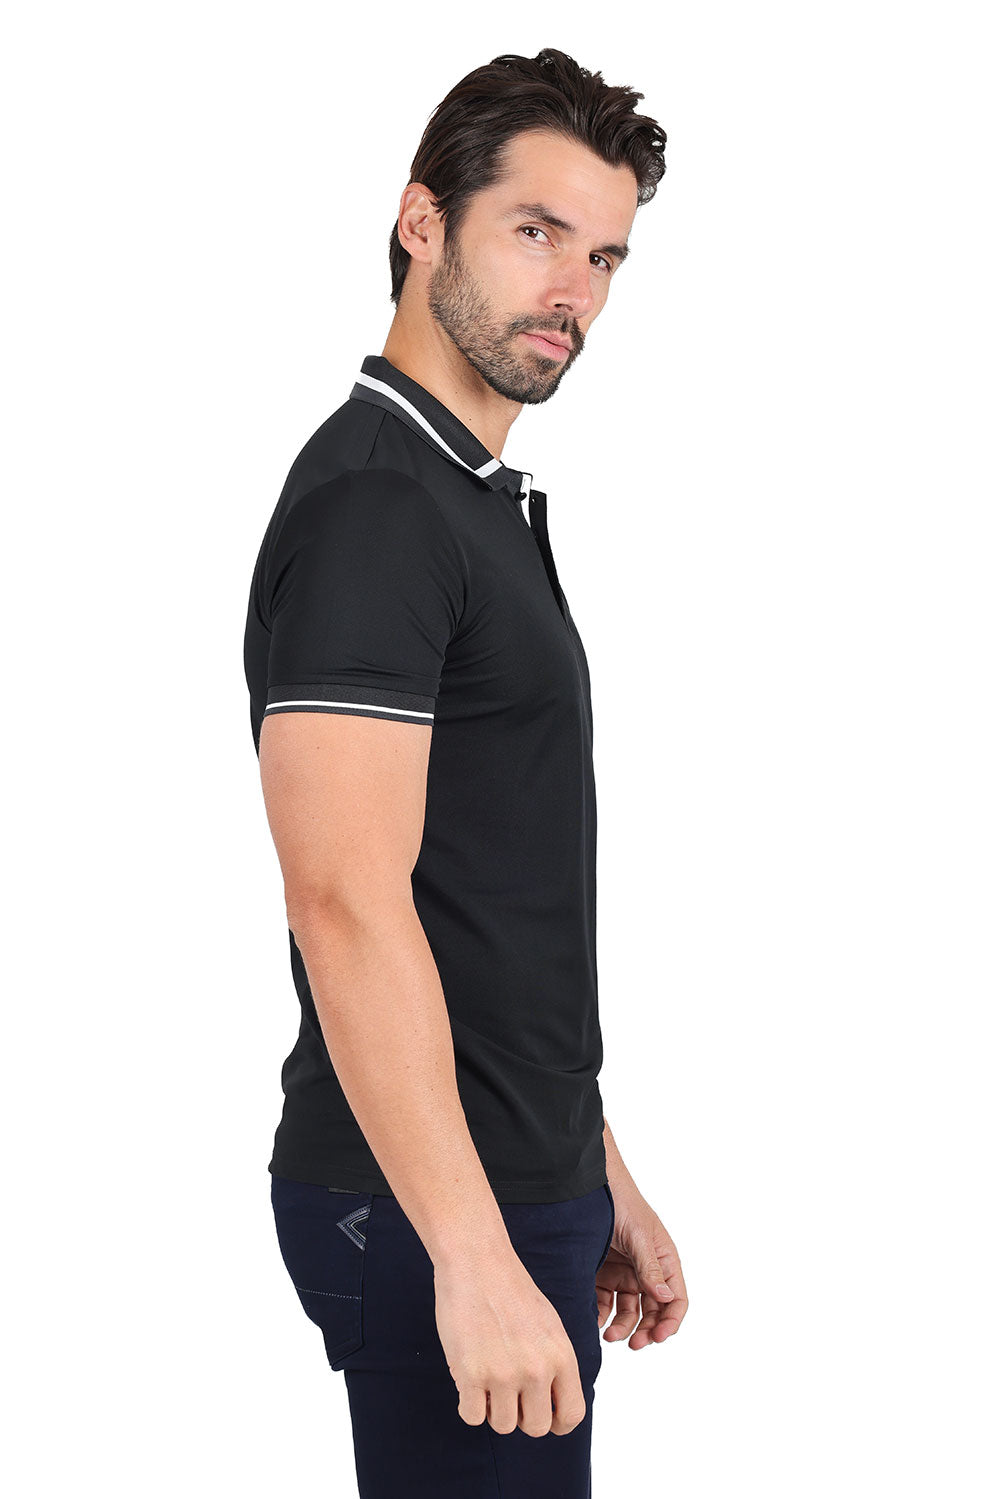 Barabas Men's Solid Color Cotton Short Sleeve Polo Shirts 3PS125 Black